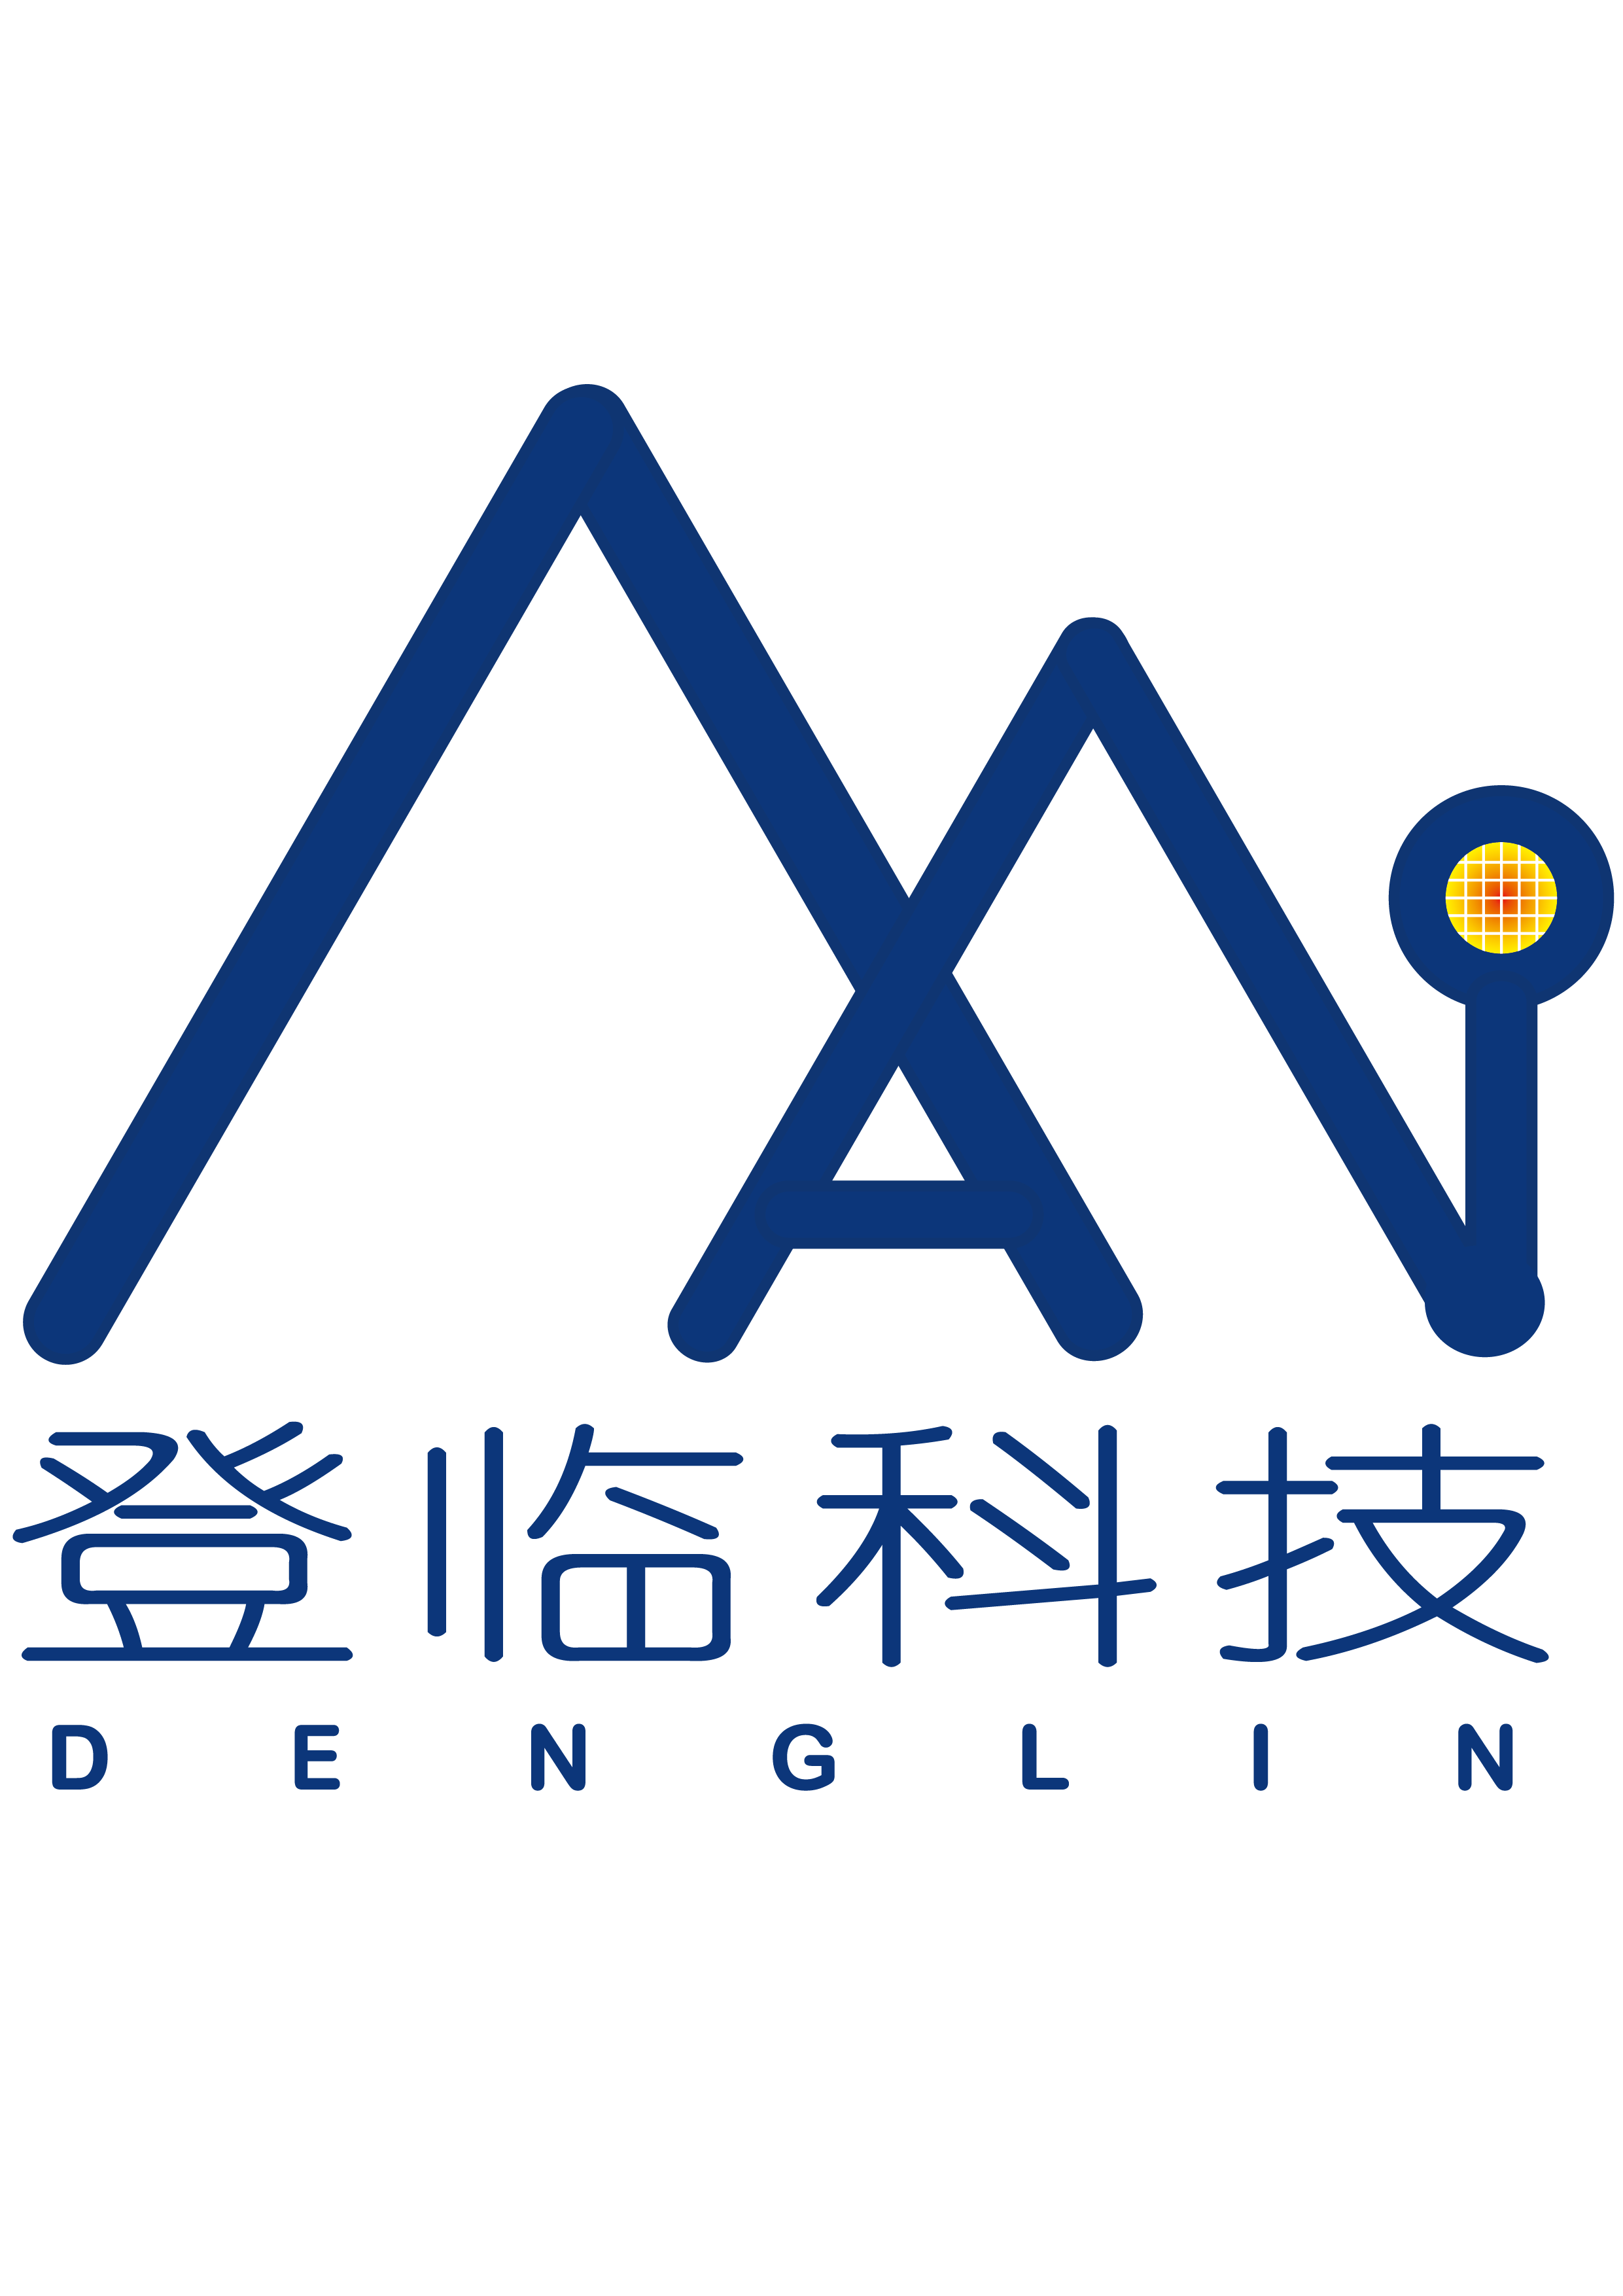 Denglin logo-Larger-01